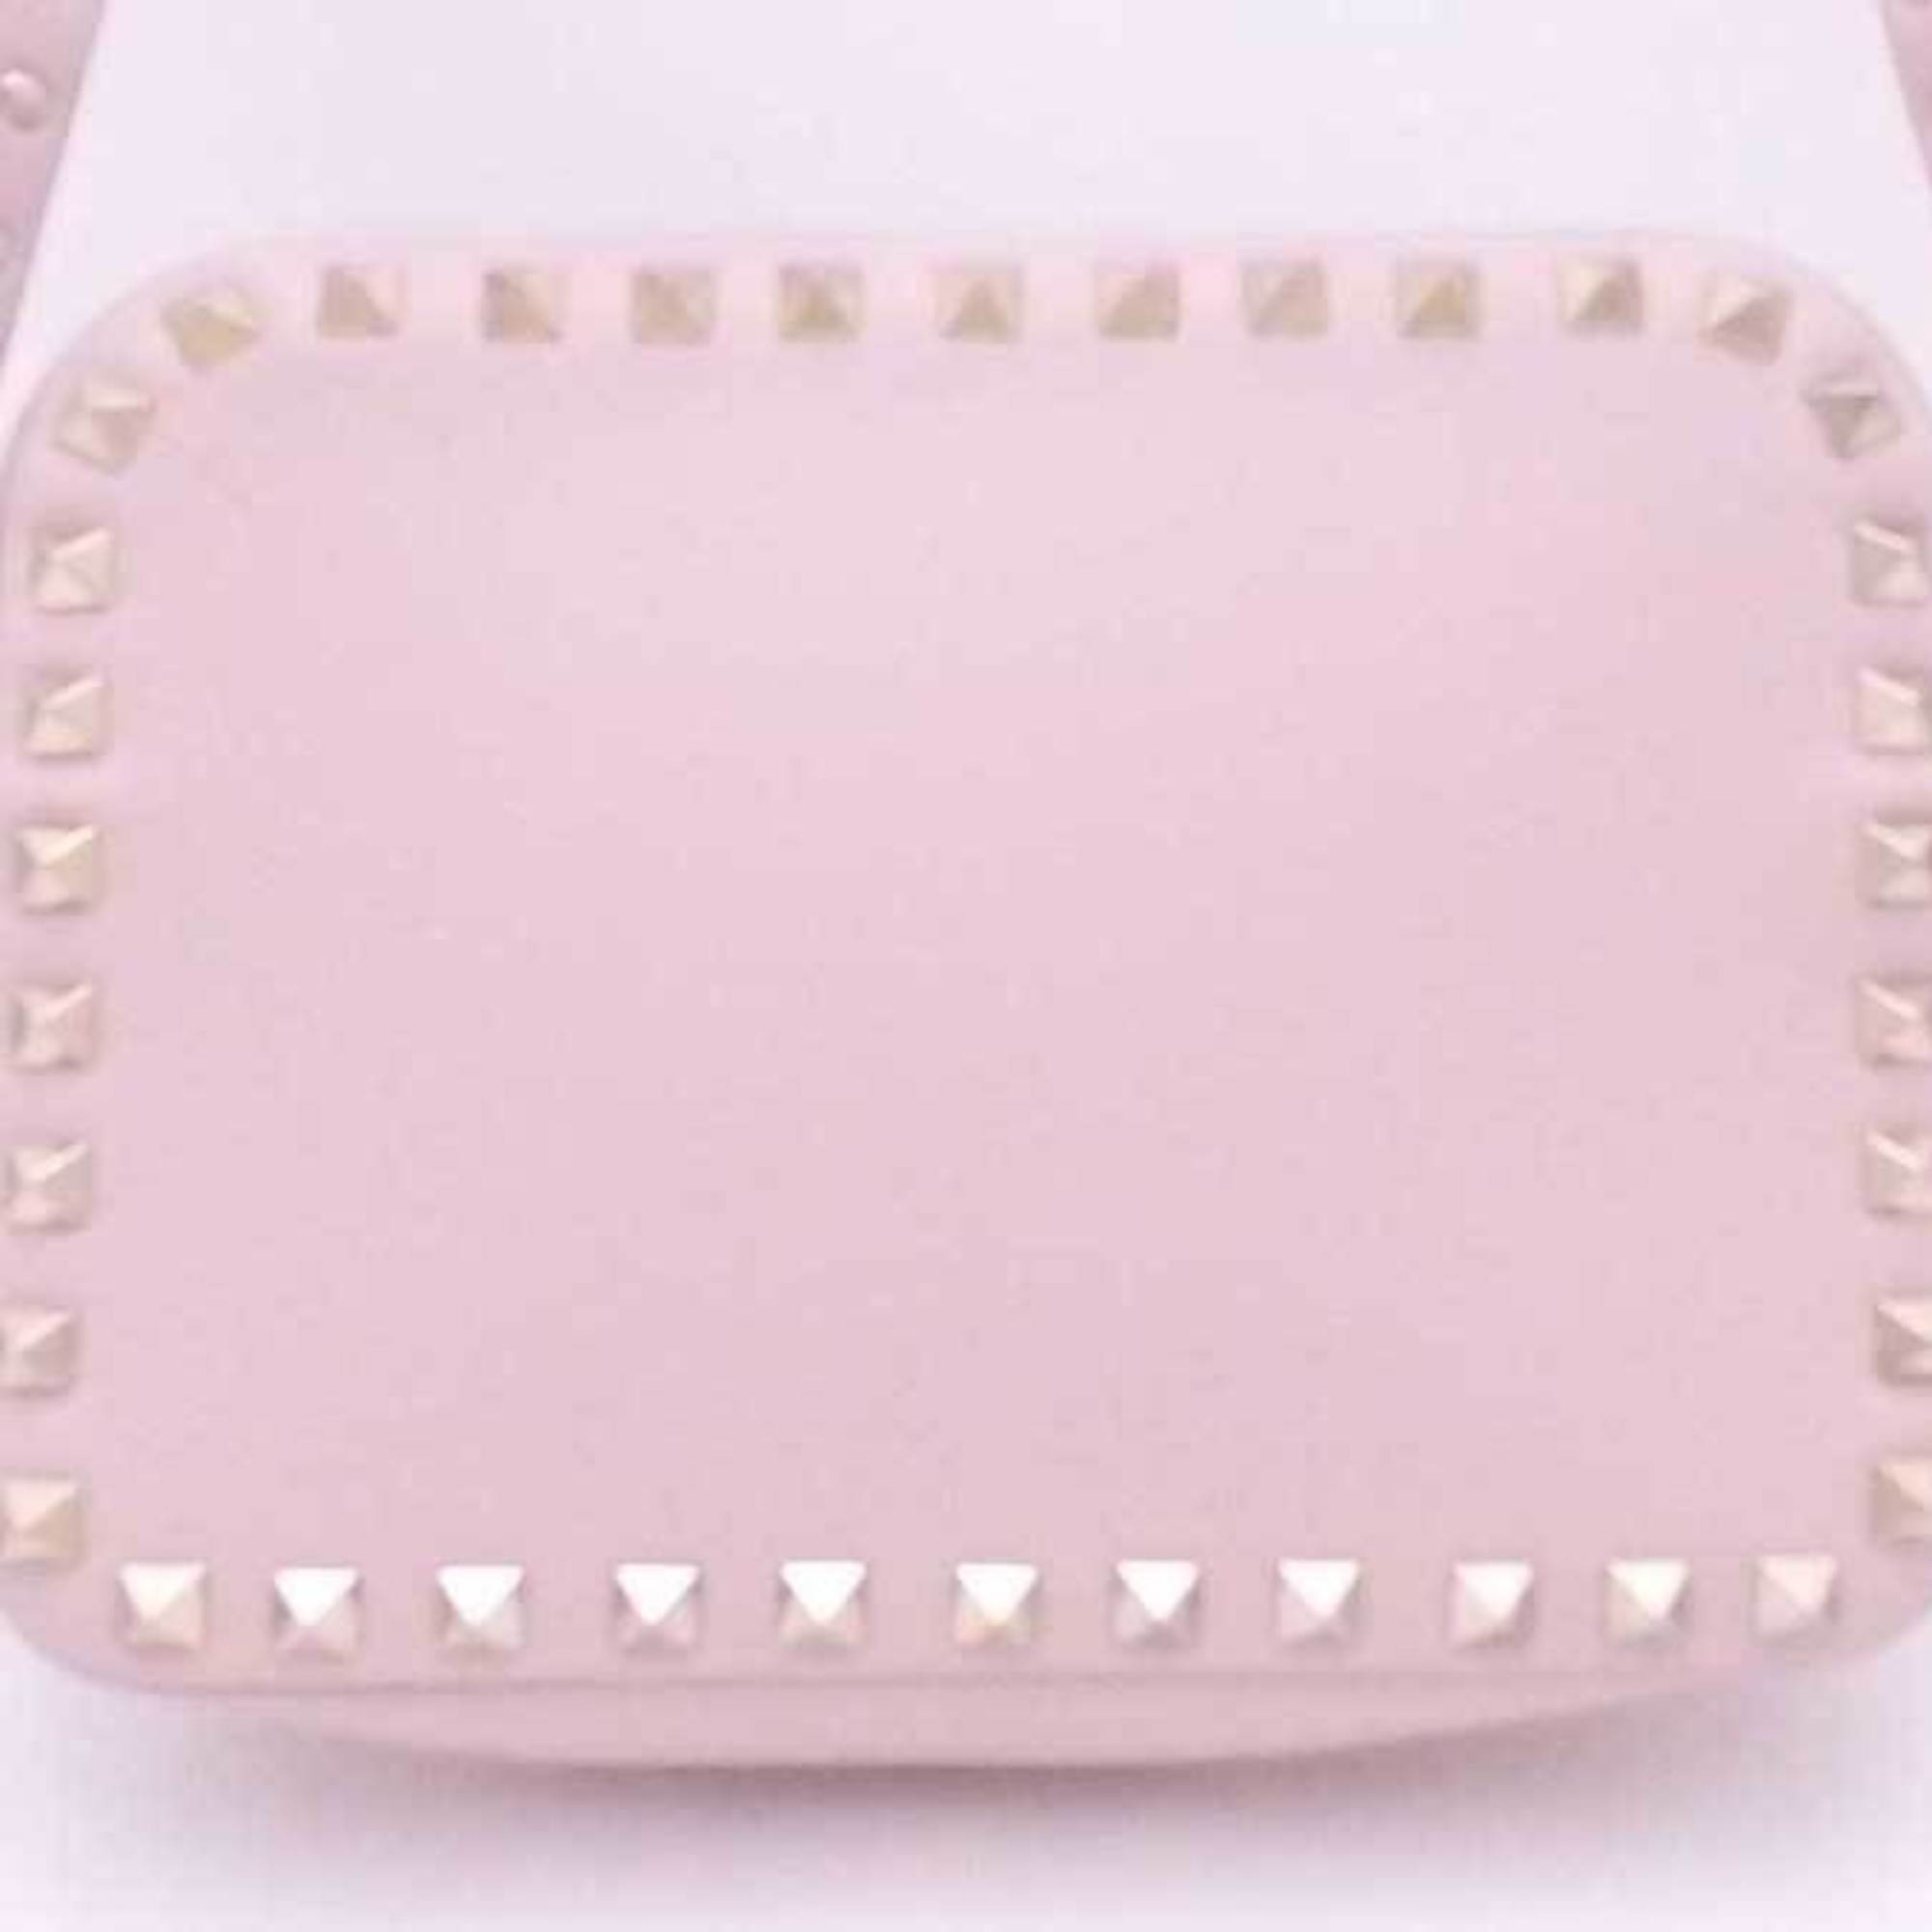 Valentino Garavani Crossbody Shoulder Bag Rockstuds Leather/Metal Light Pink x Gold Women's